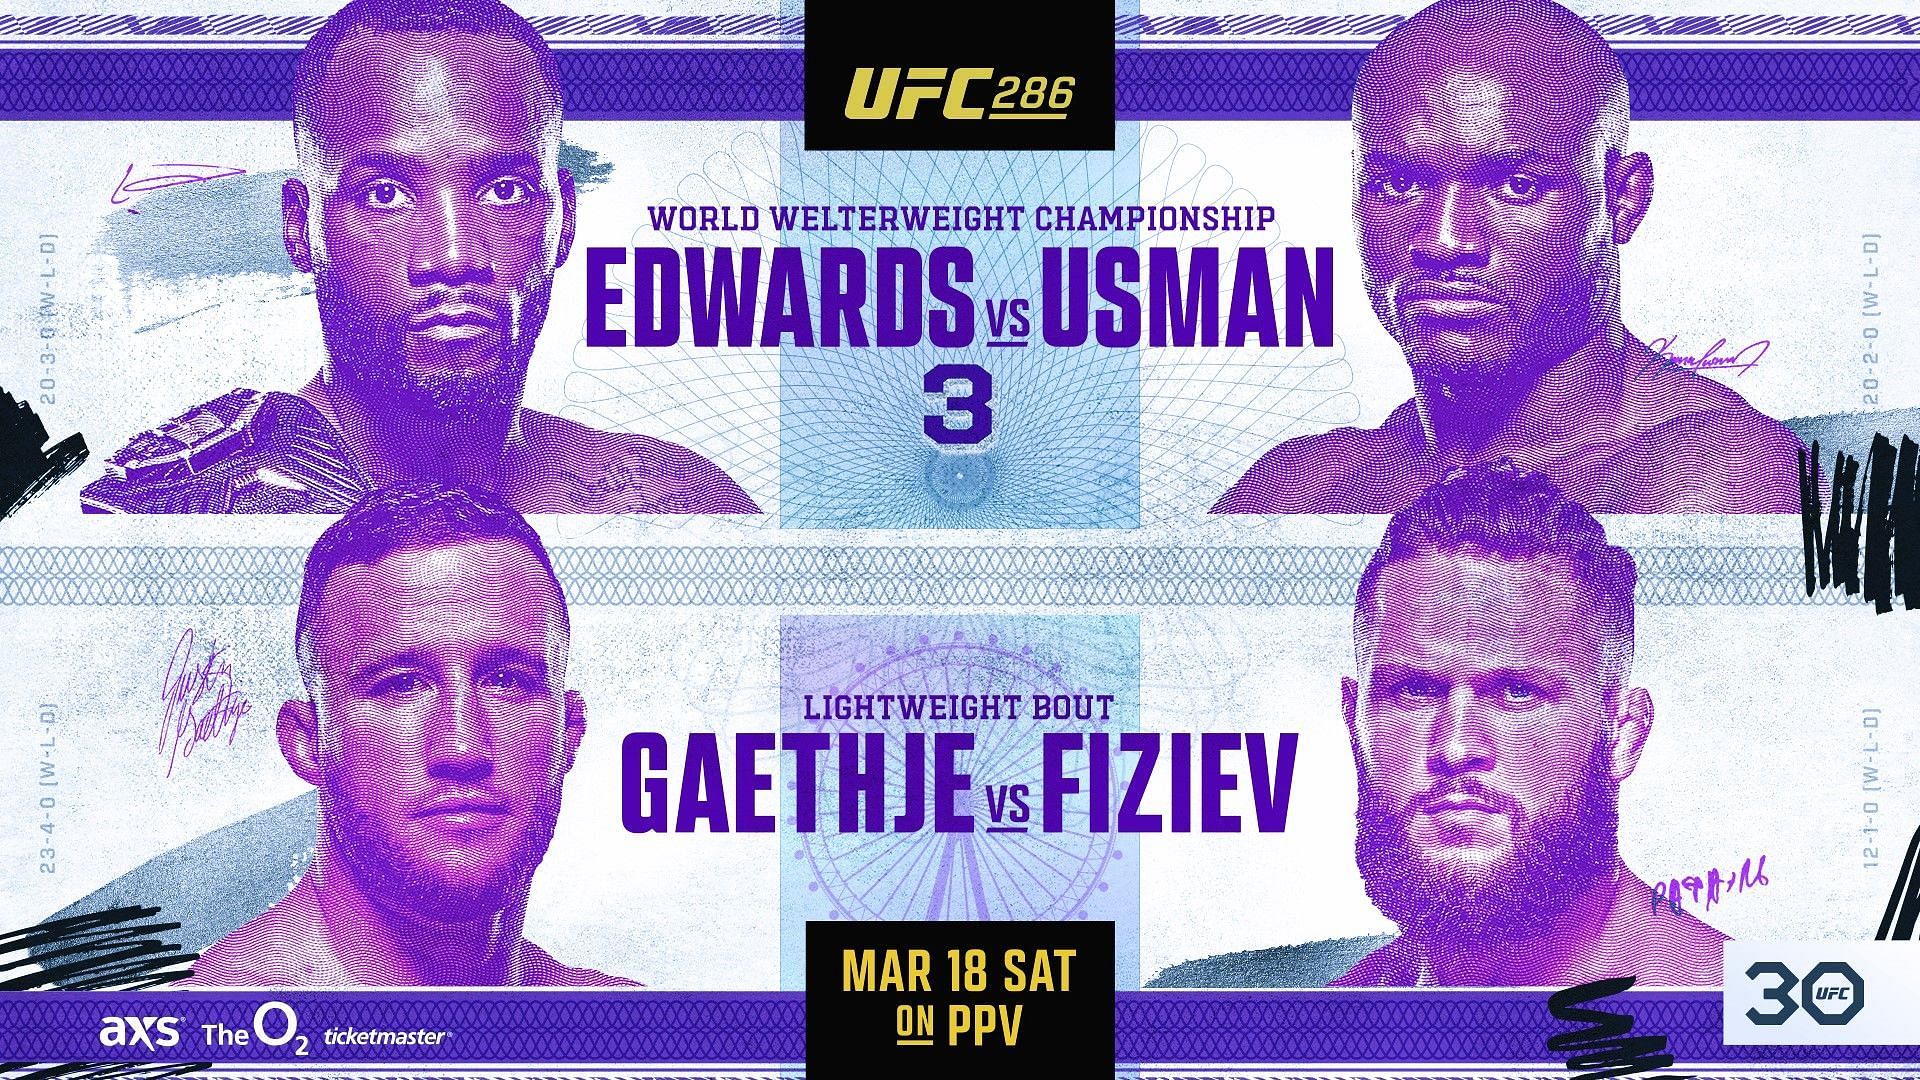 UFC 286 poster [Image via @ufc on Instagram]